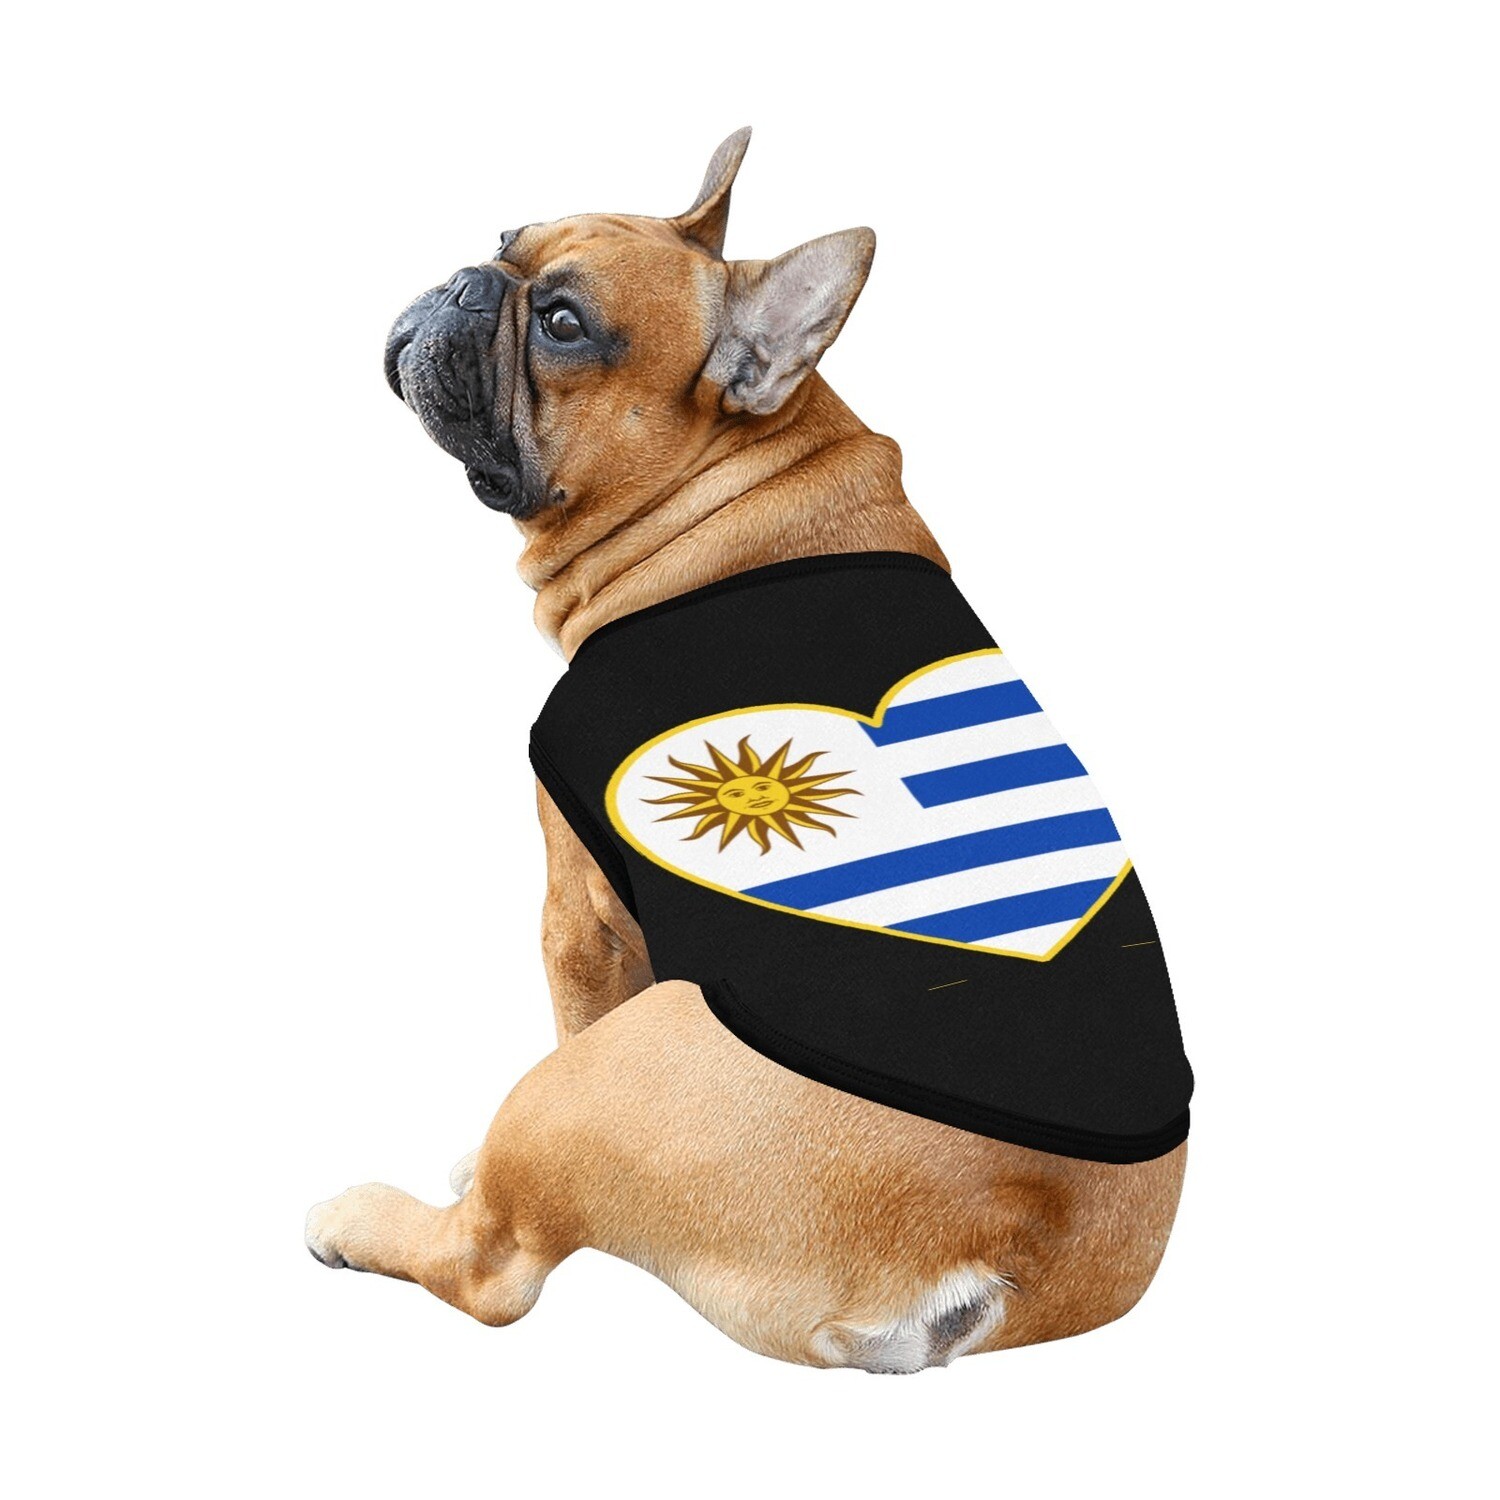 🐕🇺🇾I love Uruguay dog t-shirt, dog gift, dog tank top, dog shirt, dog clothes, gift, 7 sizes XS to 3XL, Uruguayan flag, heart shape, black